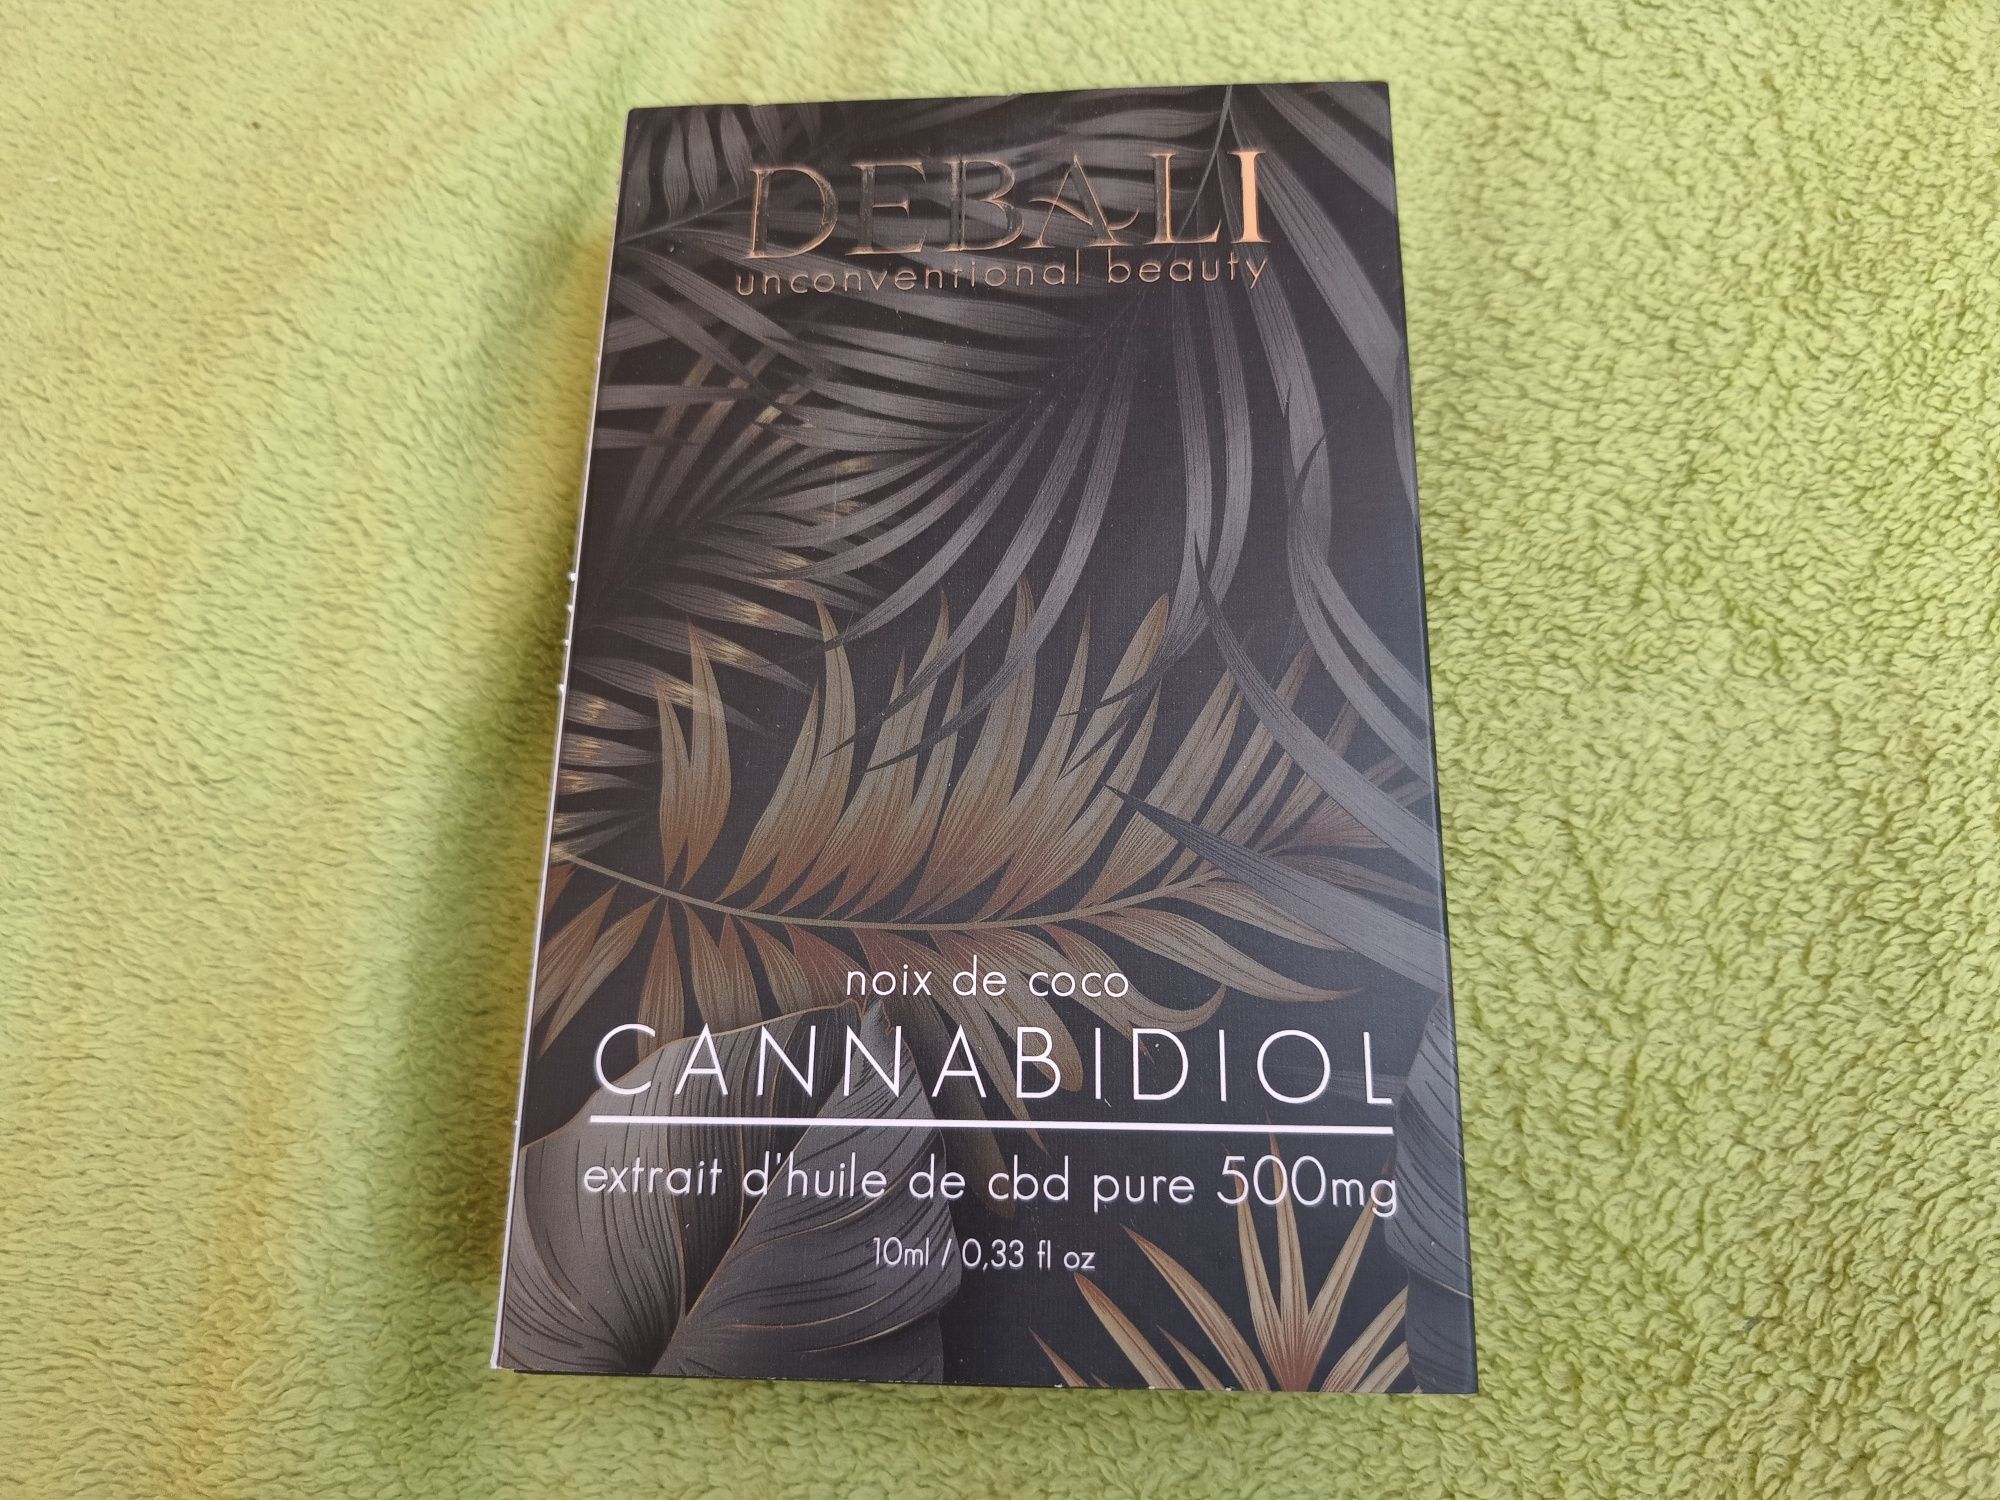 Naturalny olejek Cbd Debali Cannabidiol 10ml Italy